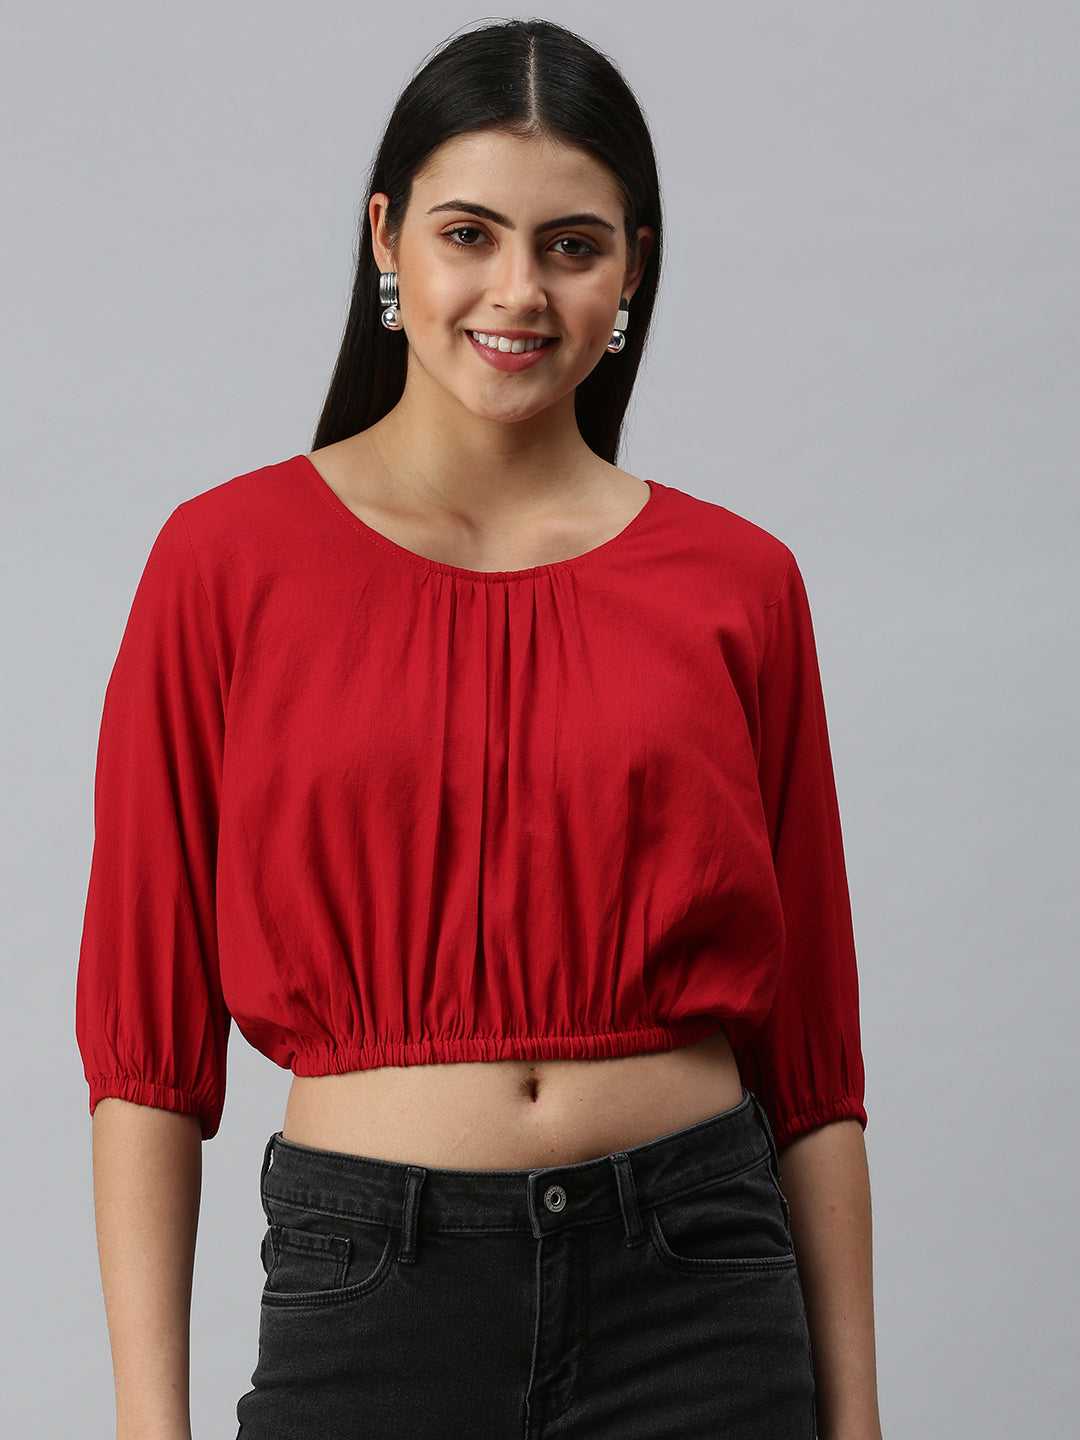 Women's Solid Red Top